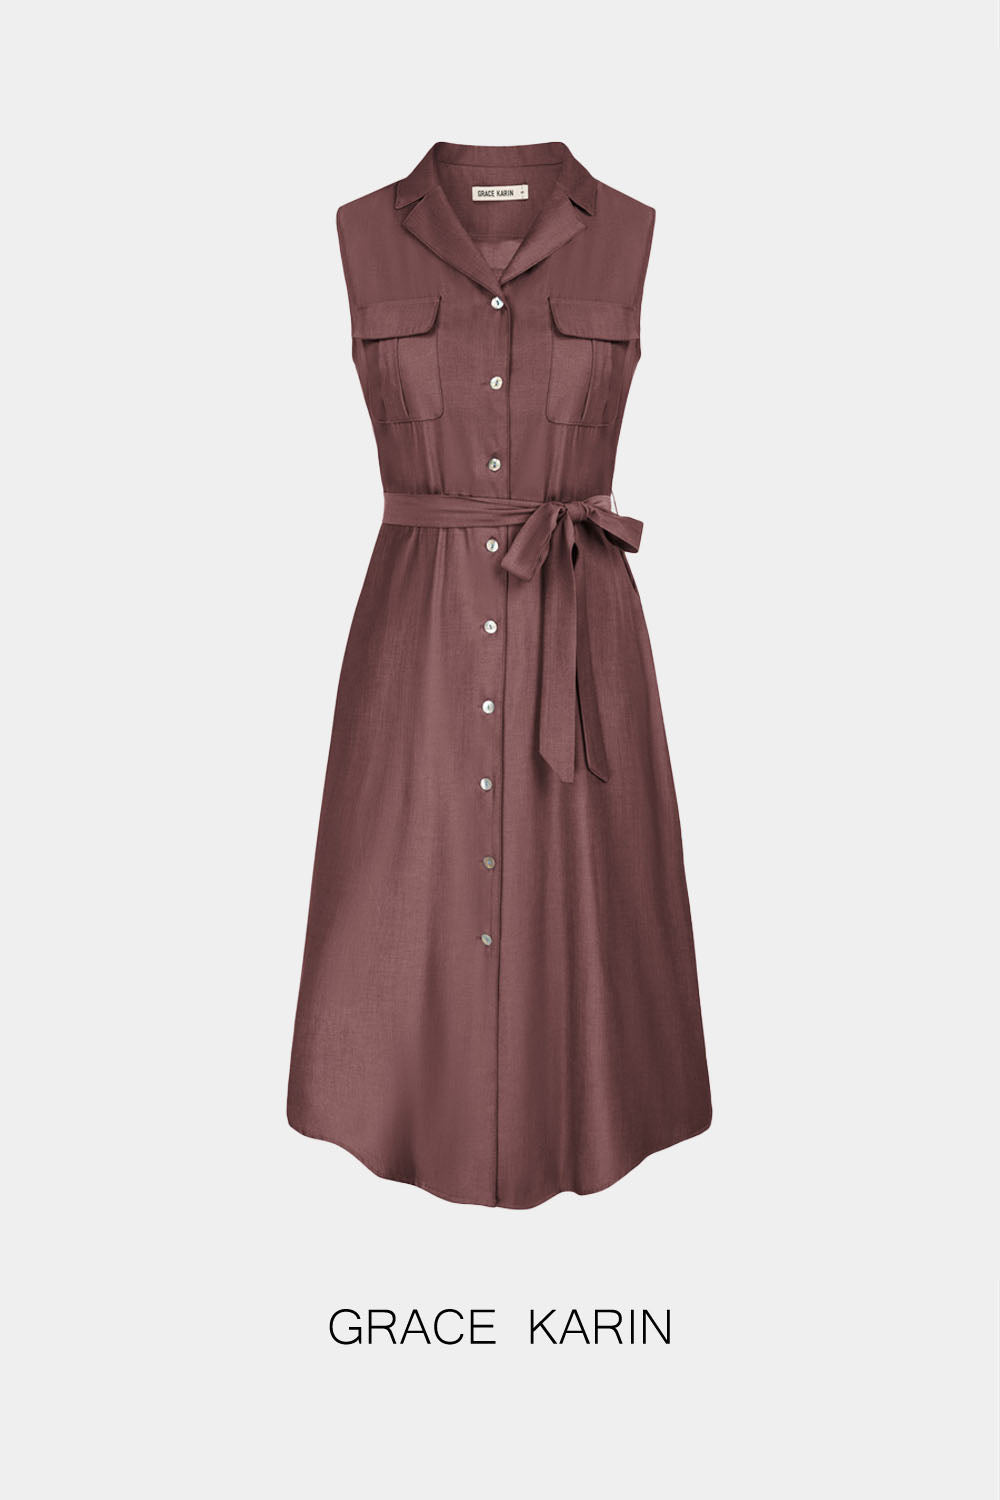 【$19.99 Flash Sale!】GRACE KARIN Lapel Collar Dress with Belt Sleeveless Dress